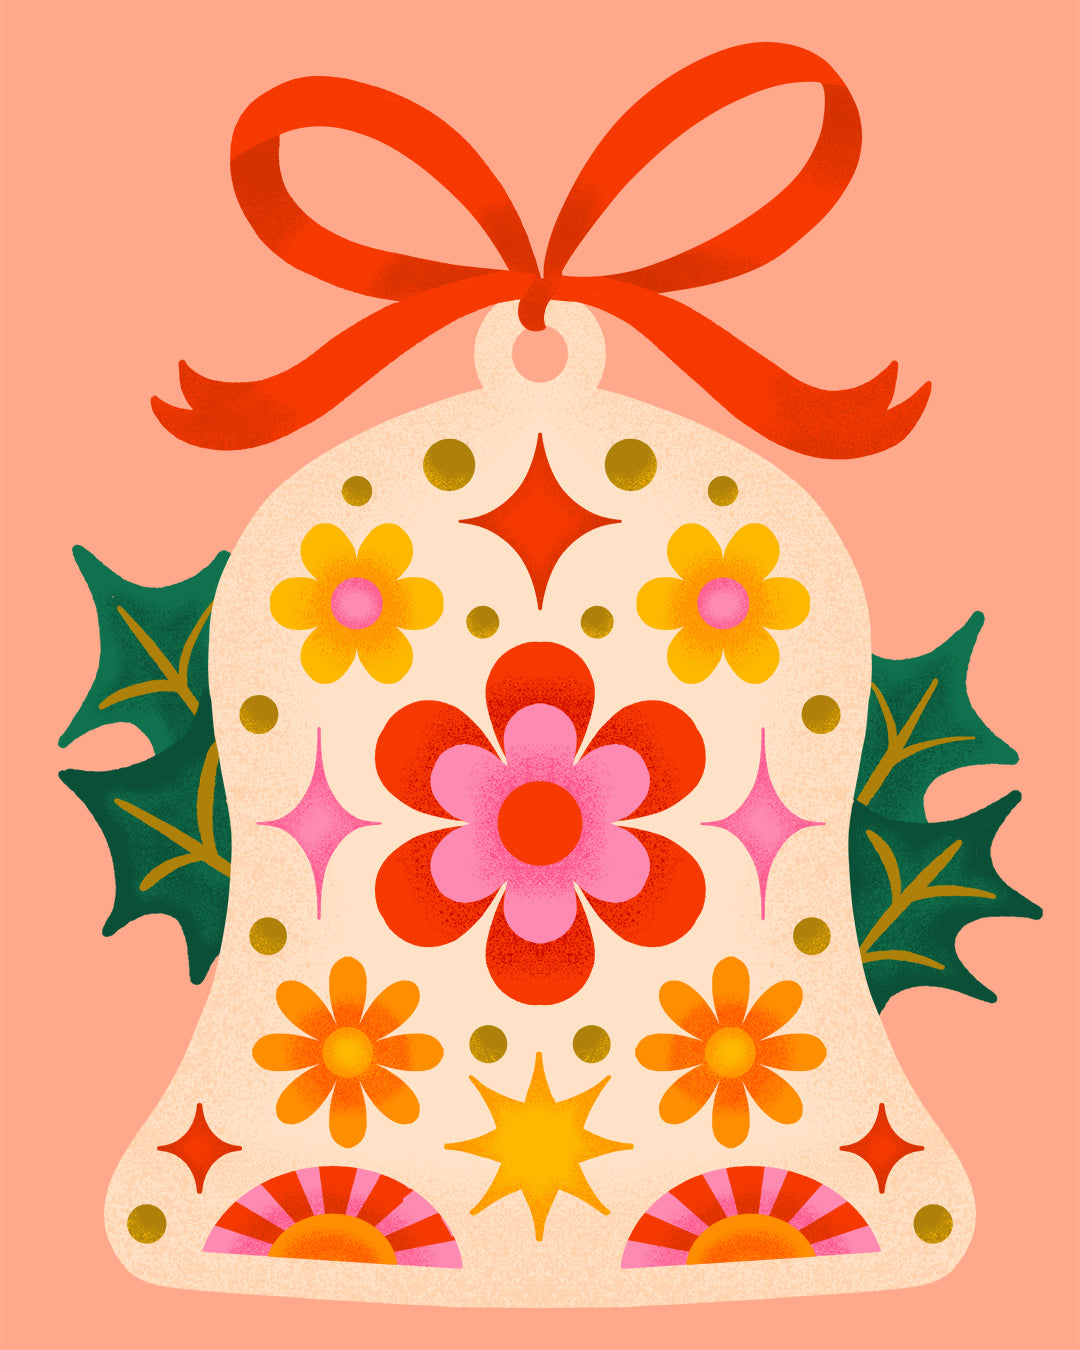 Retro Christmas Bell Greeting Card